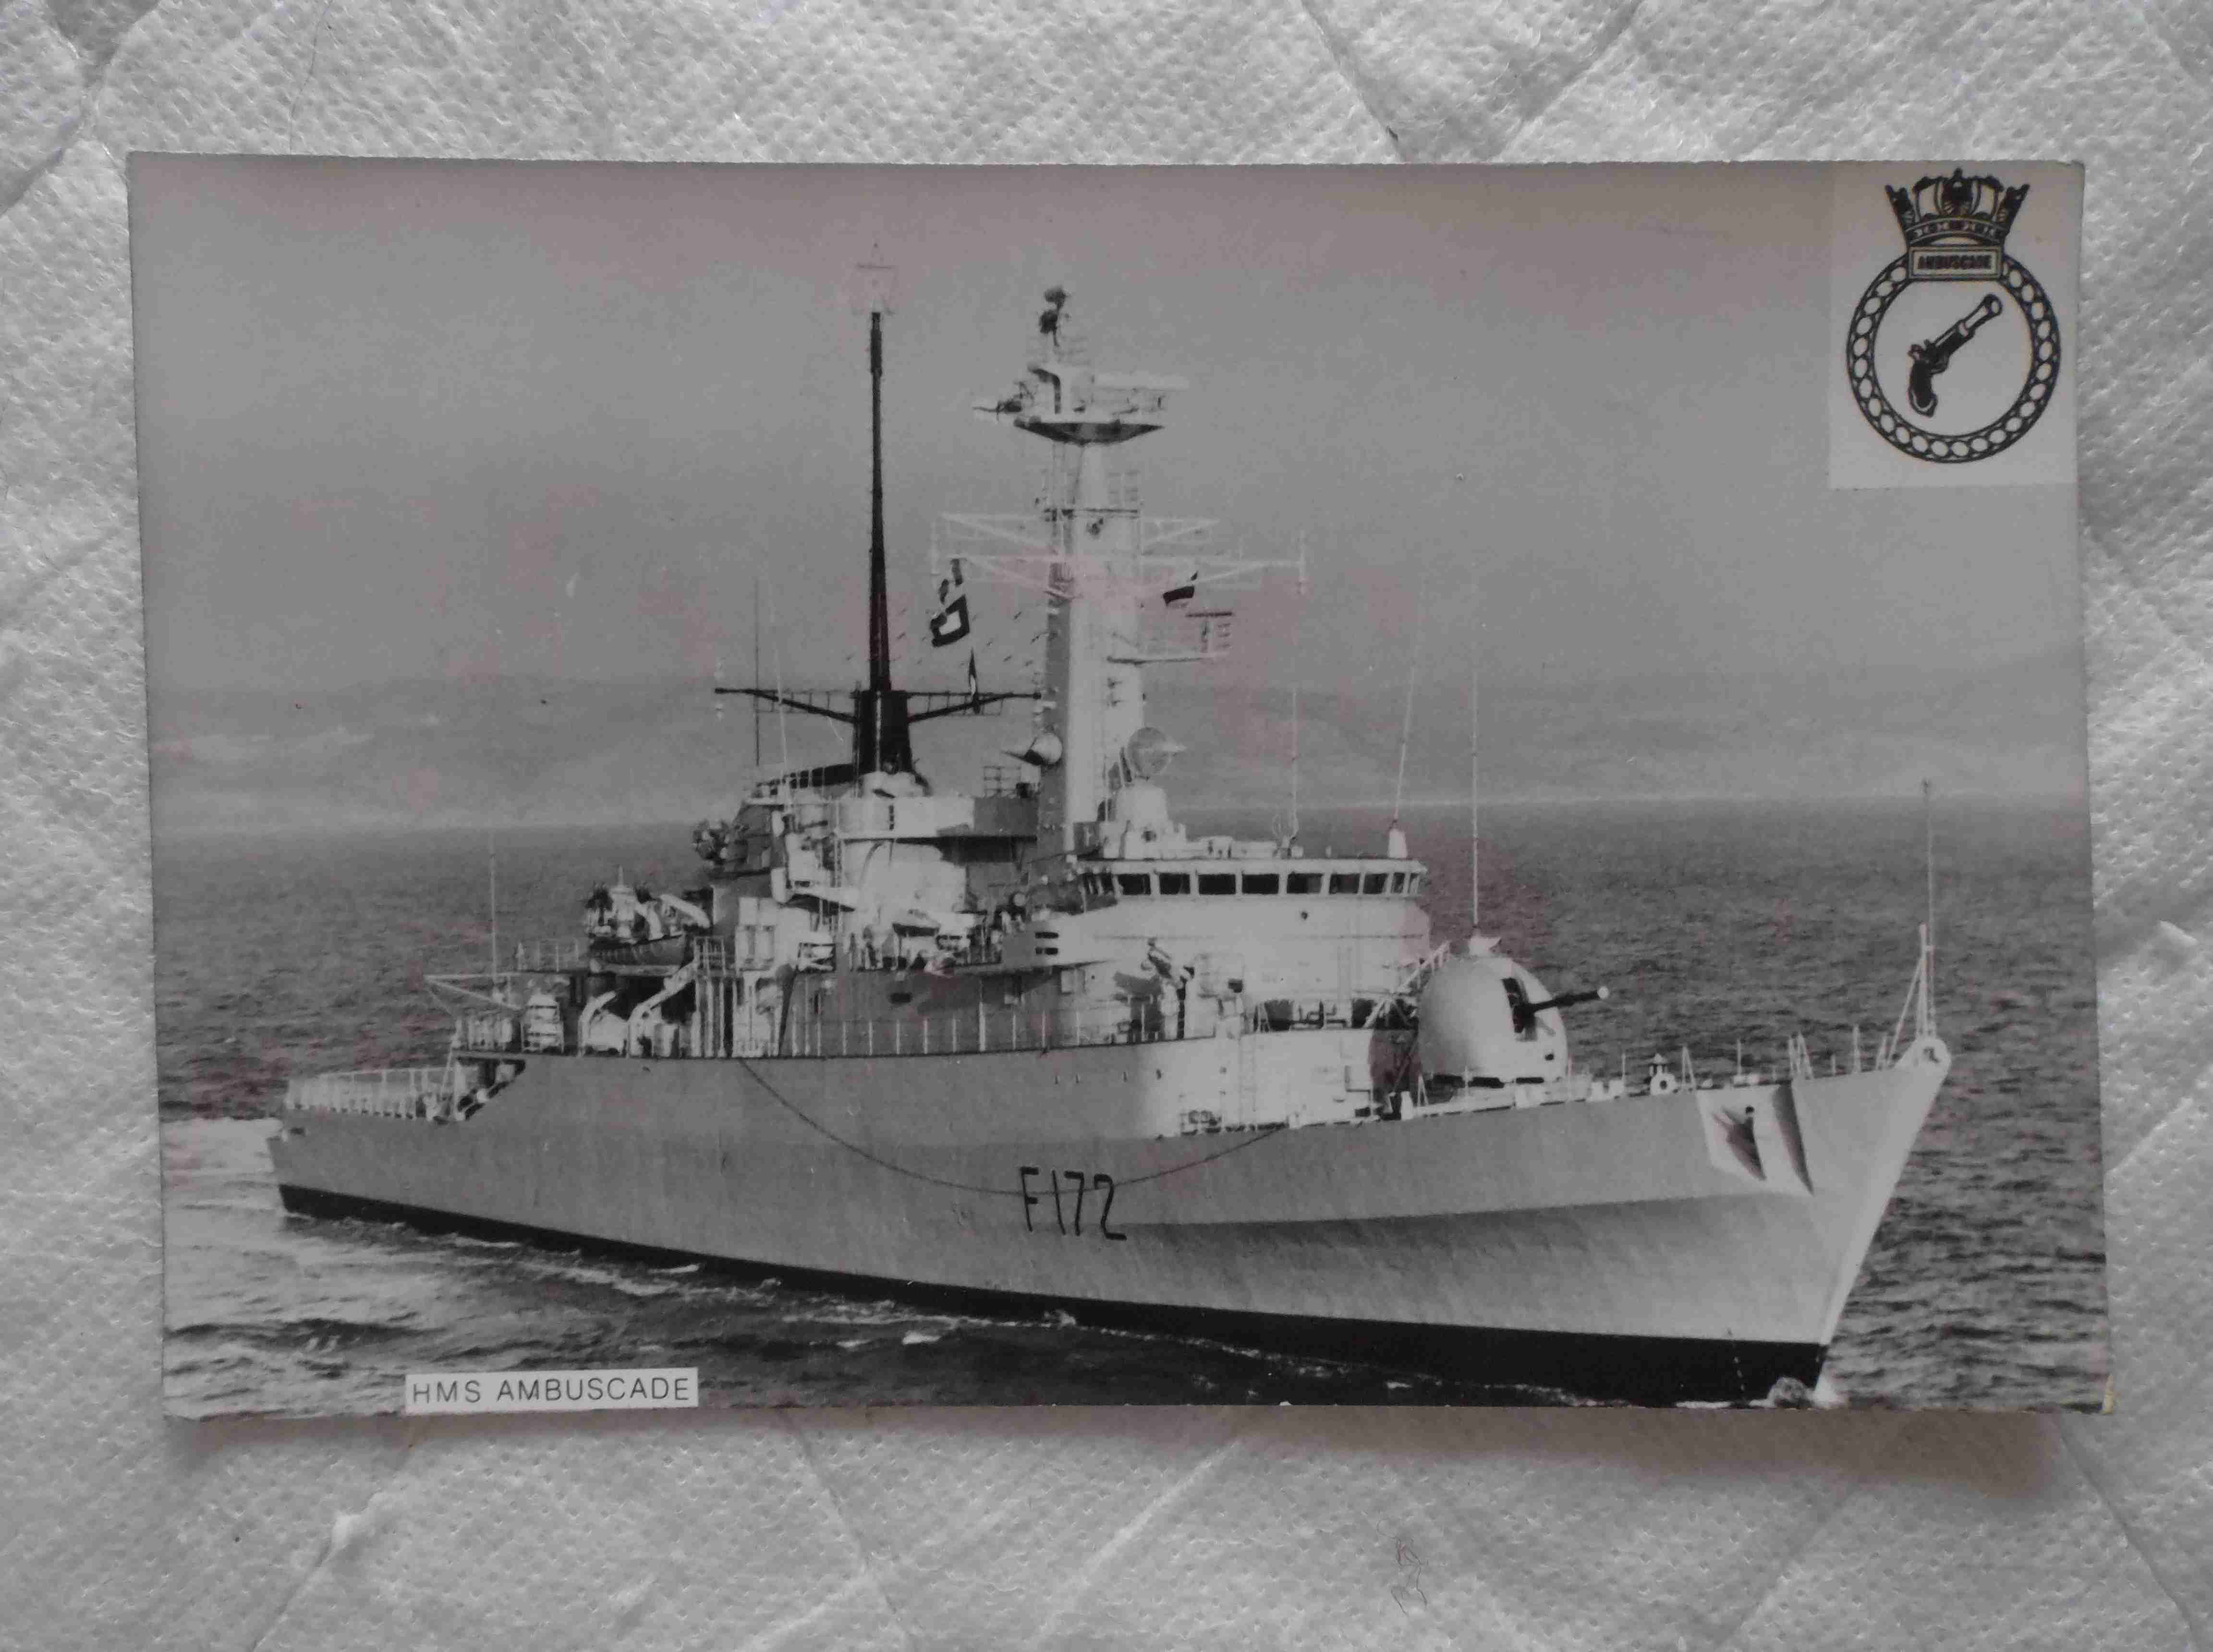 POSTCARD SIZE PHOTOGRAPH OF THE ROYAL NAVAL VESSEL HMS AMBUSCADE